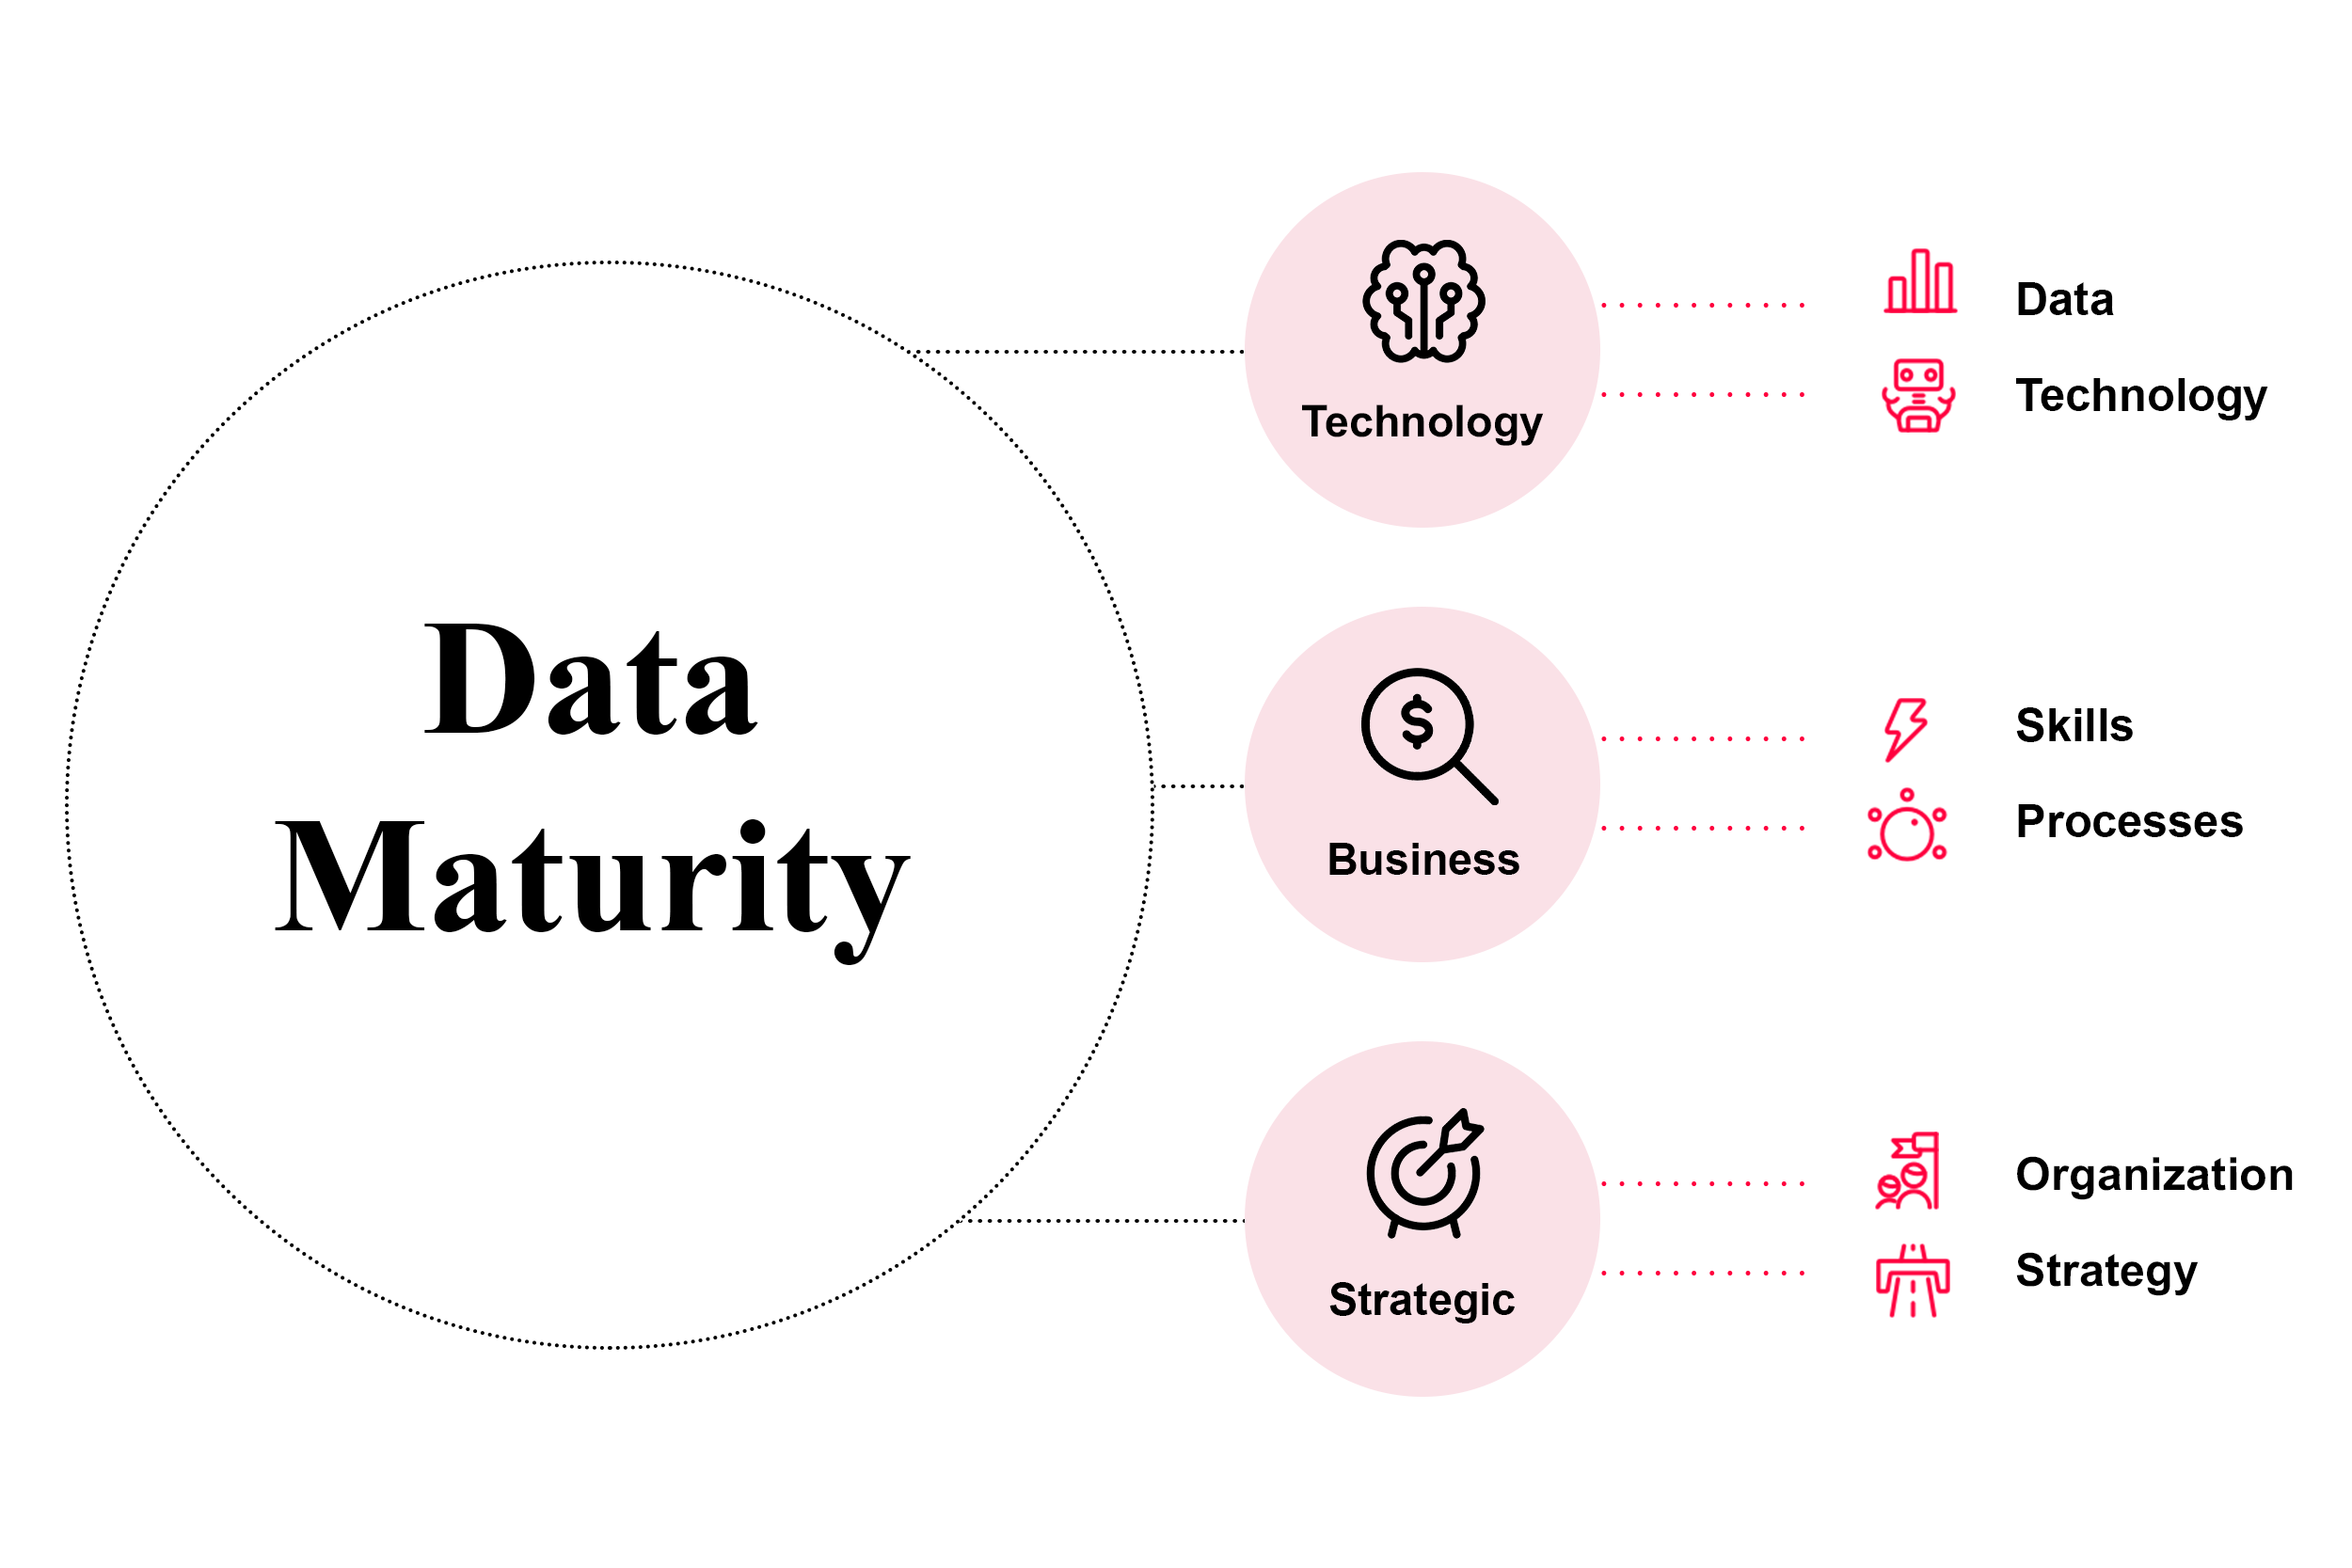 Data Maturity